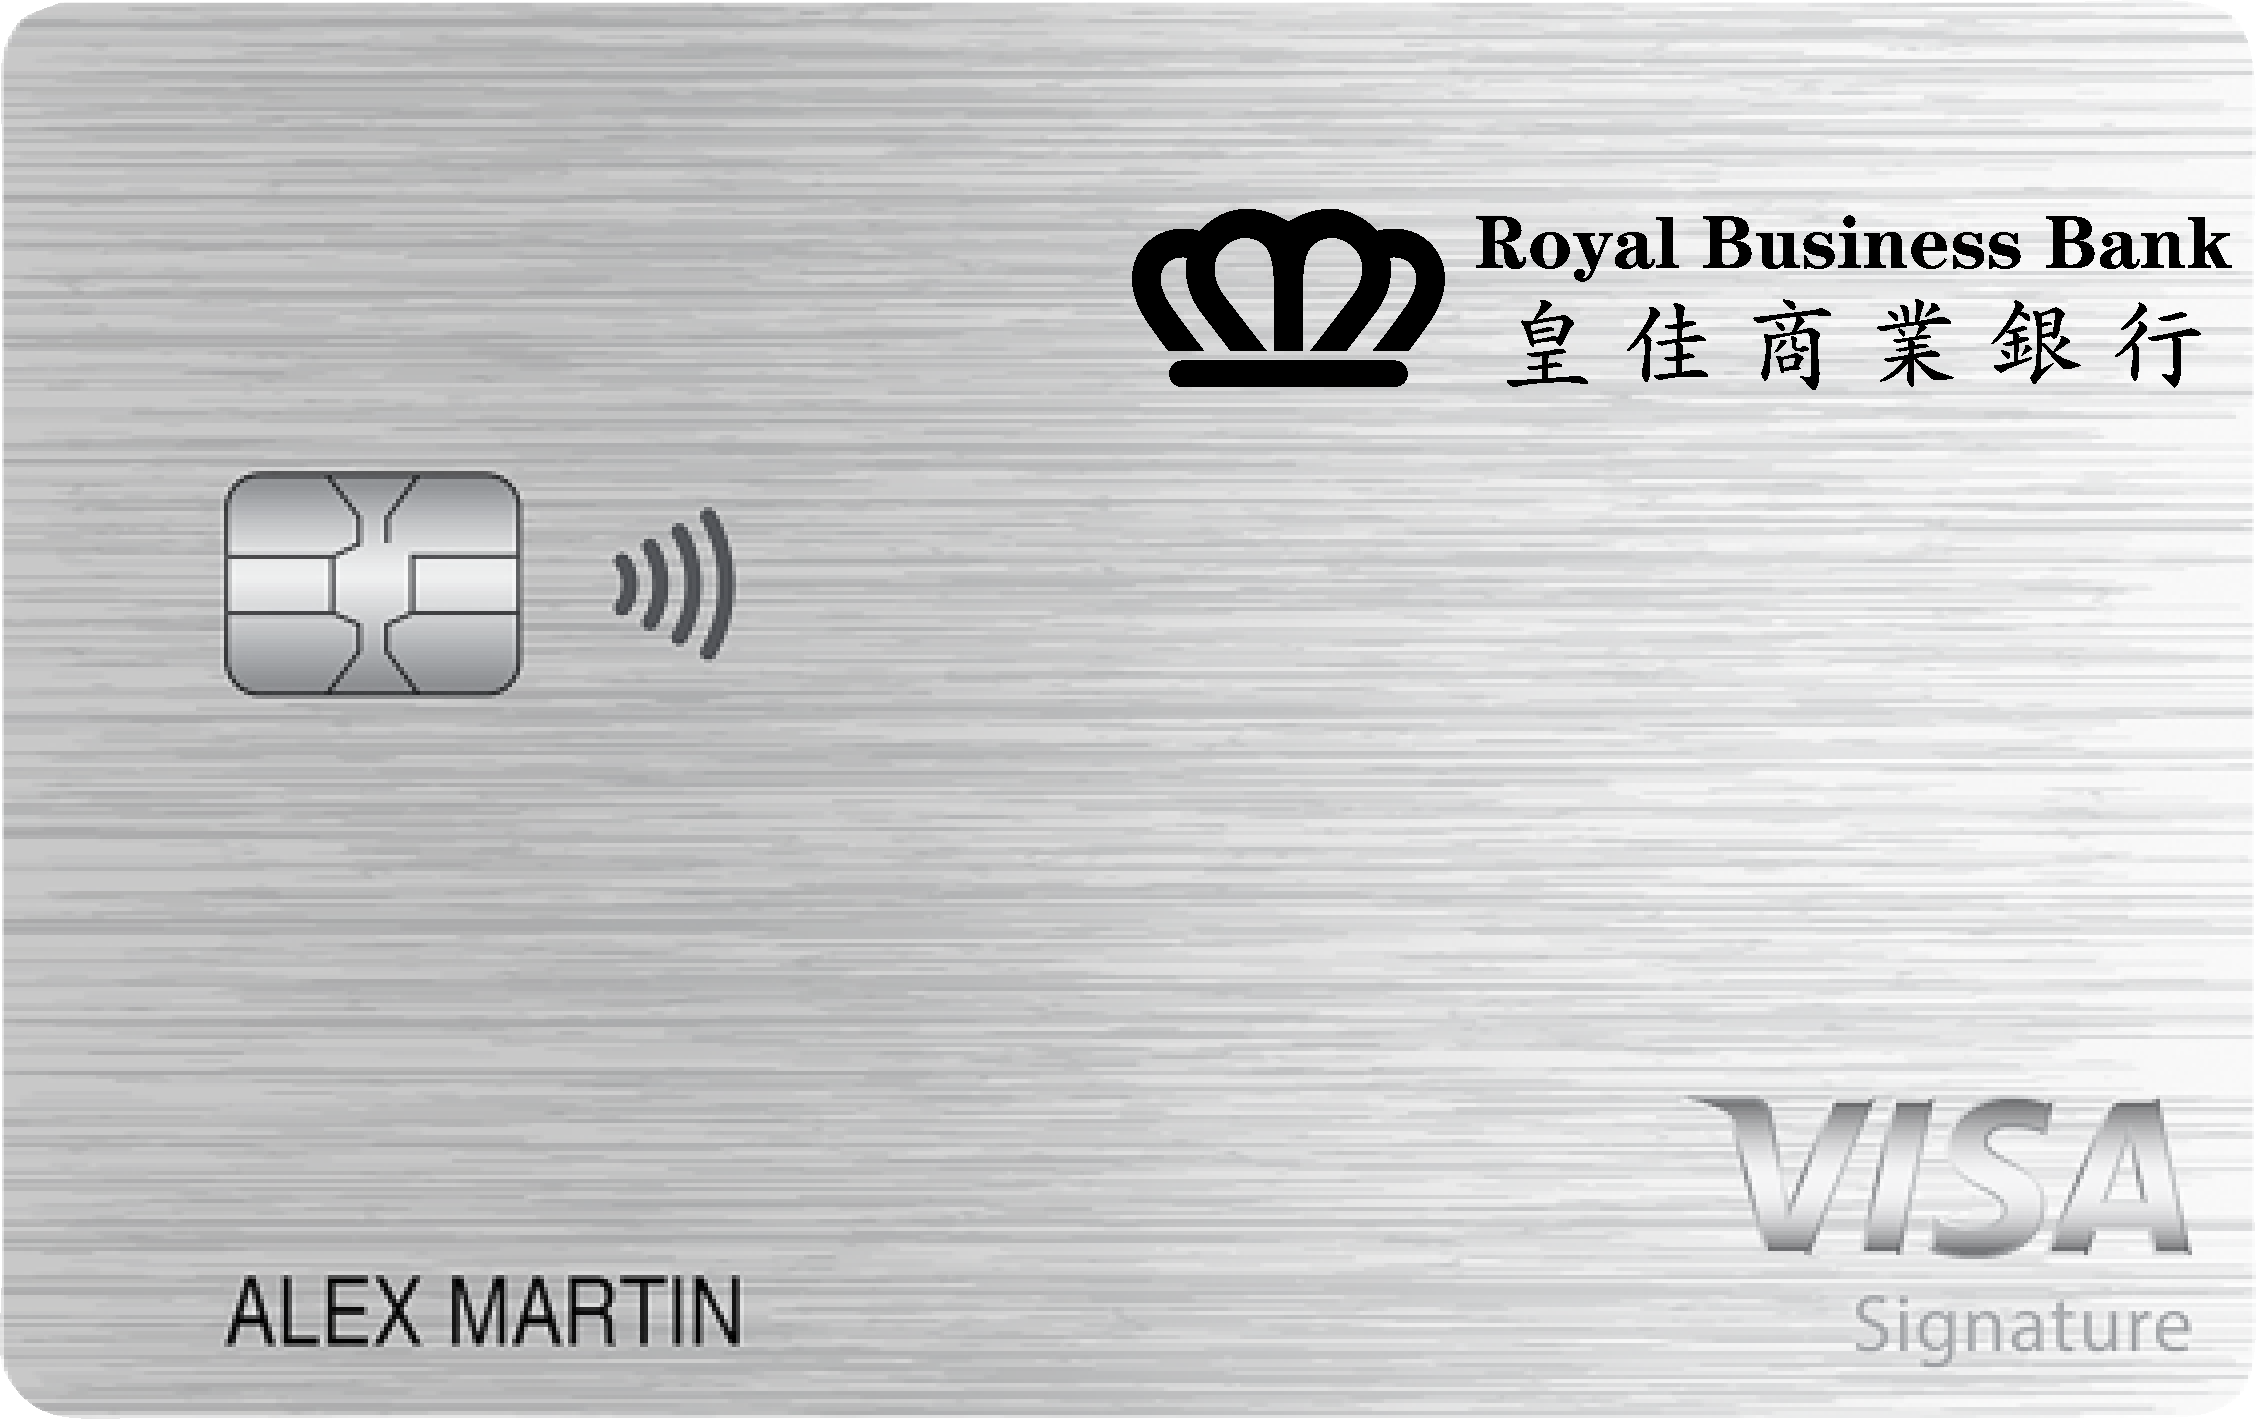 Royal Business Bank Everyday Rewards+ Card